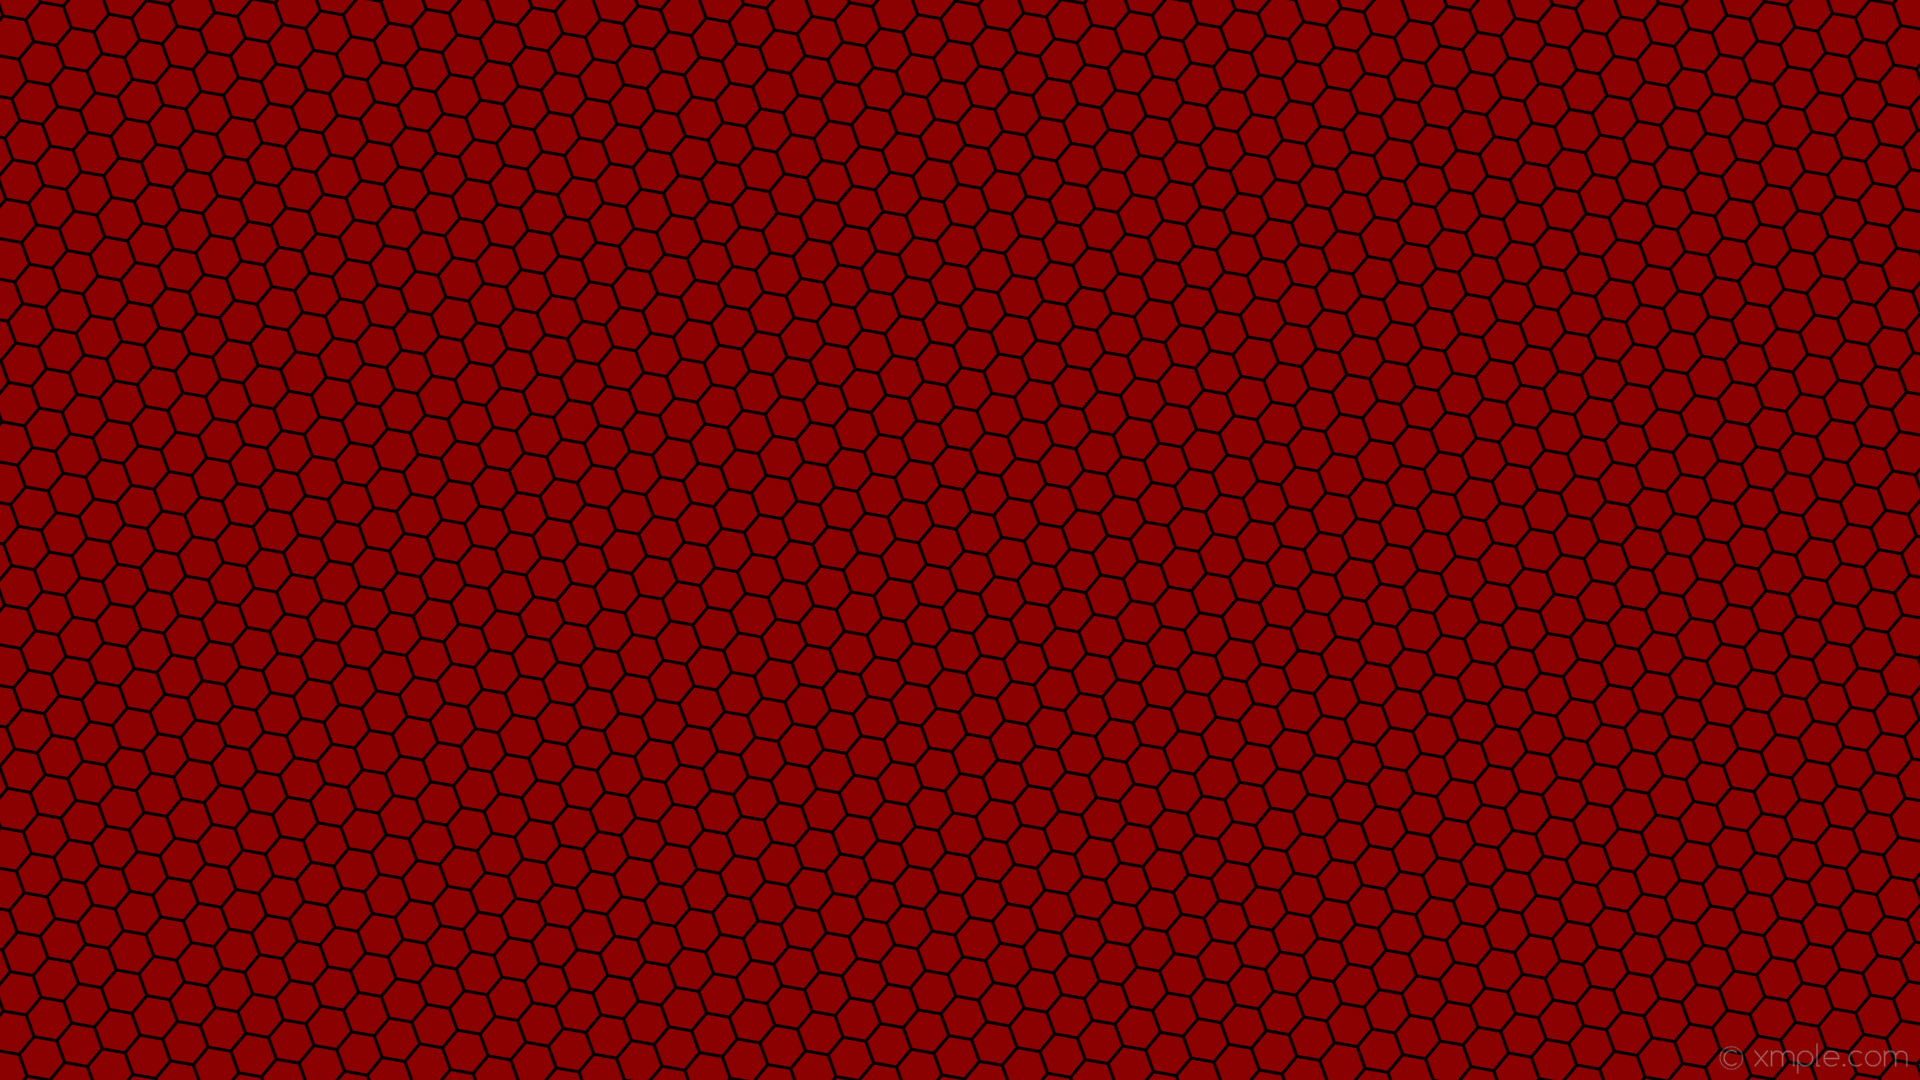 1920x1080 wallpaper beehive red hexagon honeycomb black dark red #8b0000 #000000  diagonal 20Â° 3px